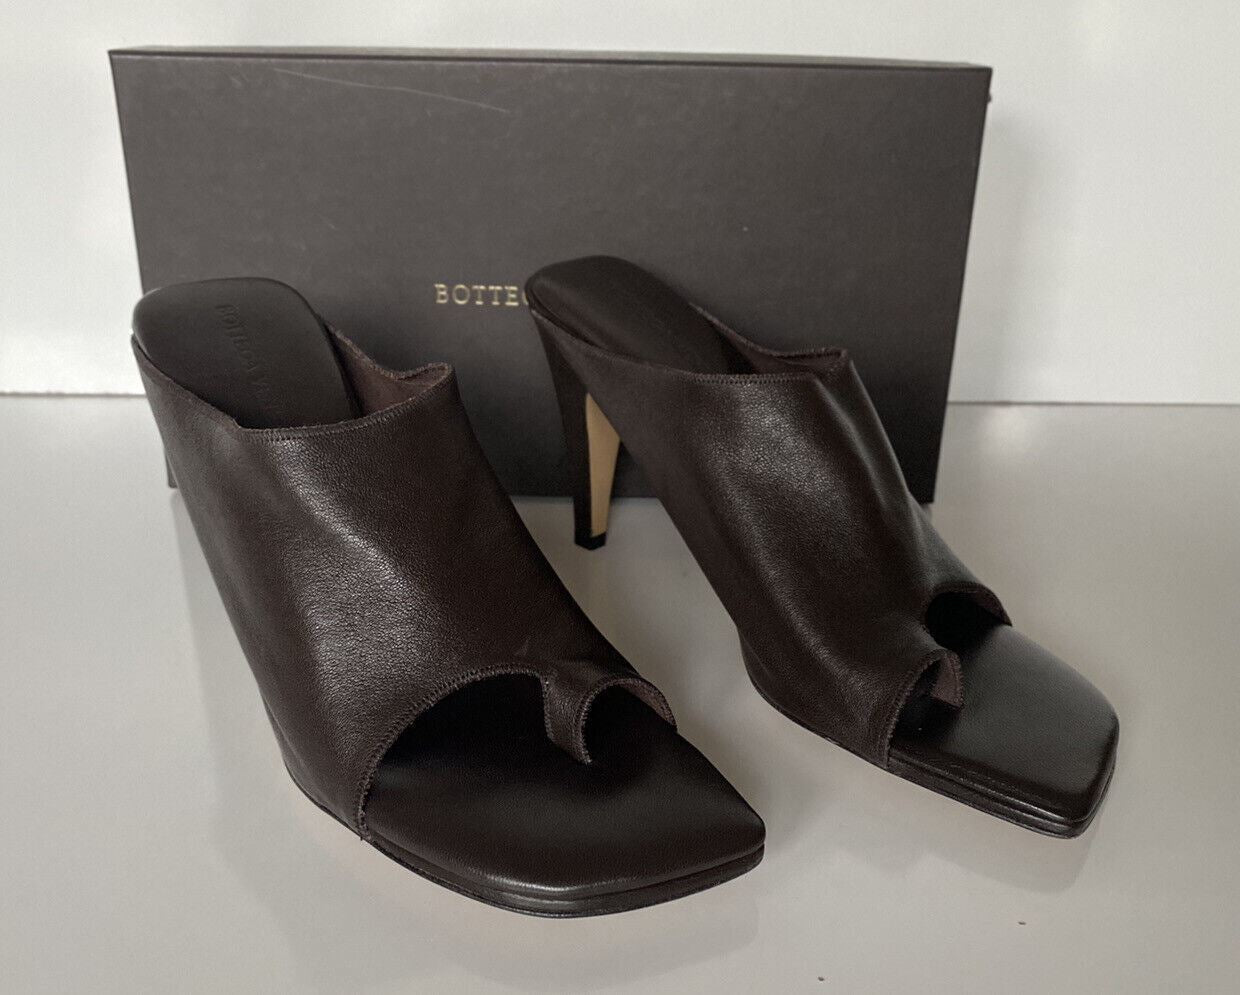 NIB $920 Bottega Veneta Leather Mules with High Vamp Brown Shoes 7.5 US 618760